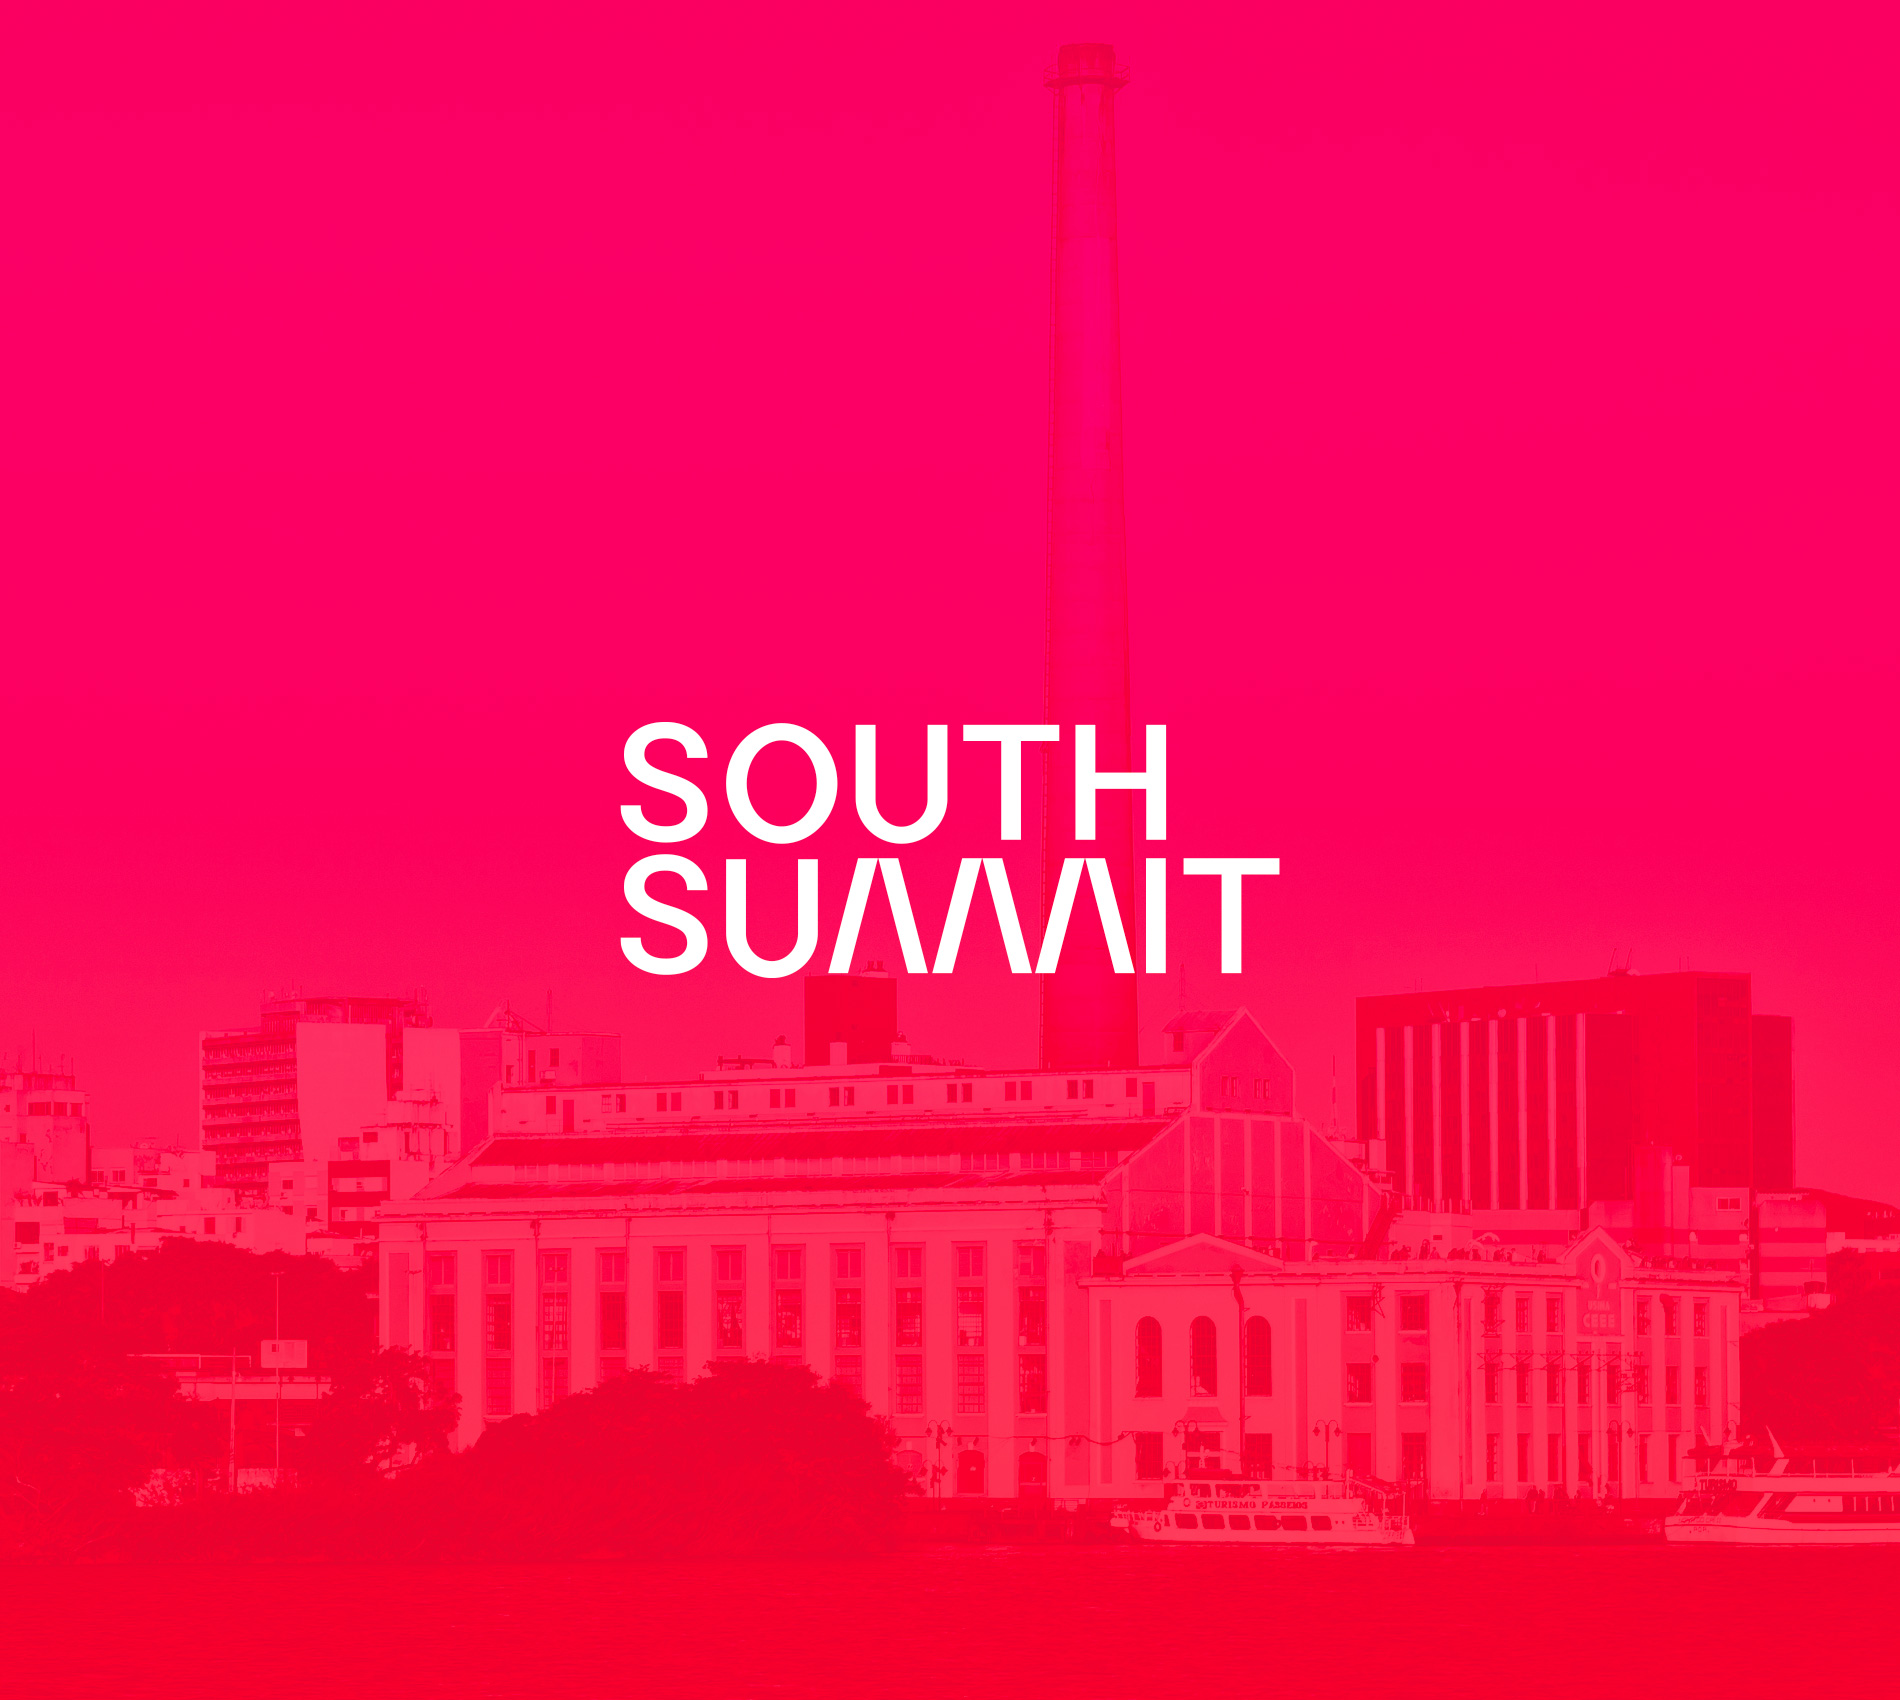 South Summit 2023